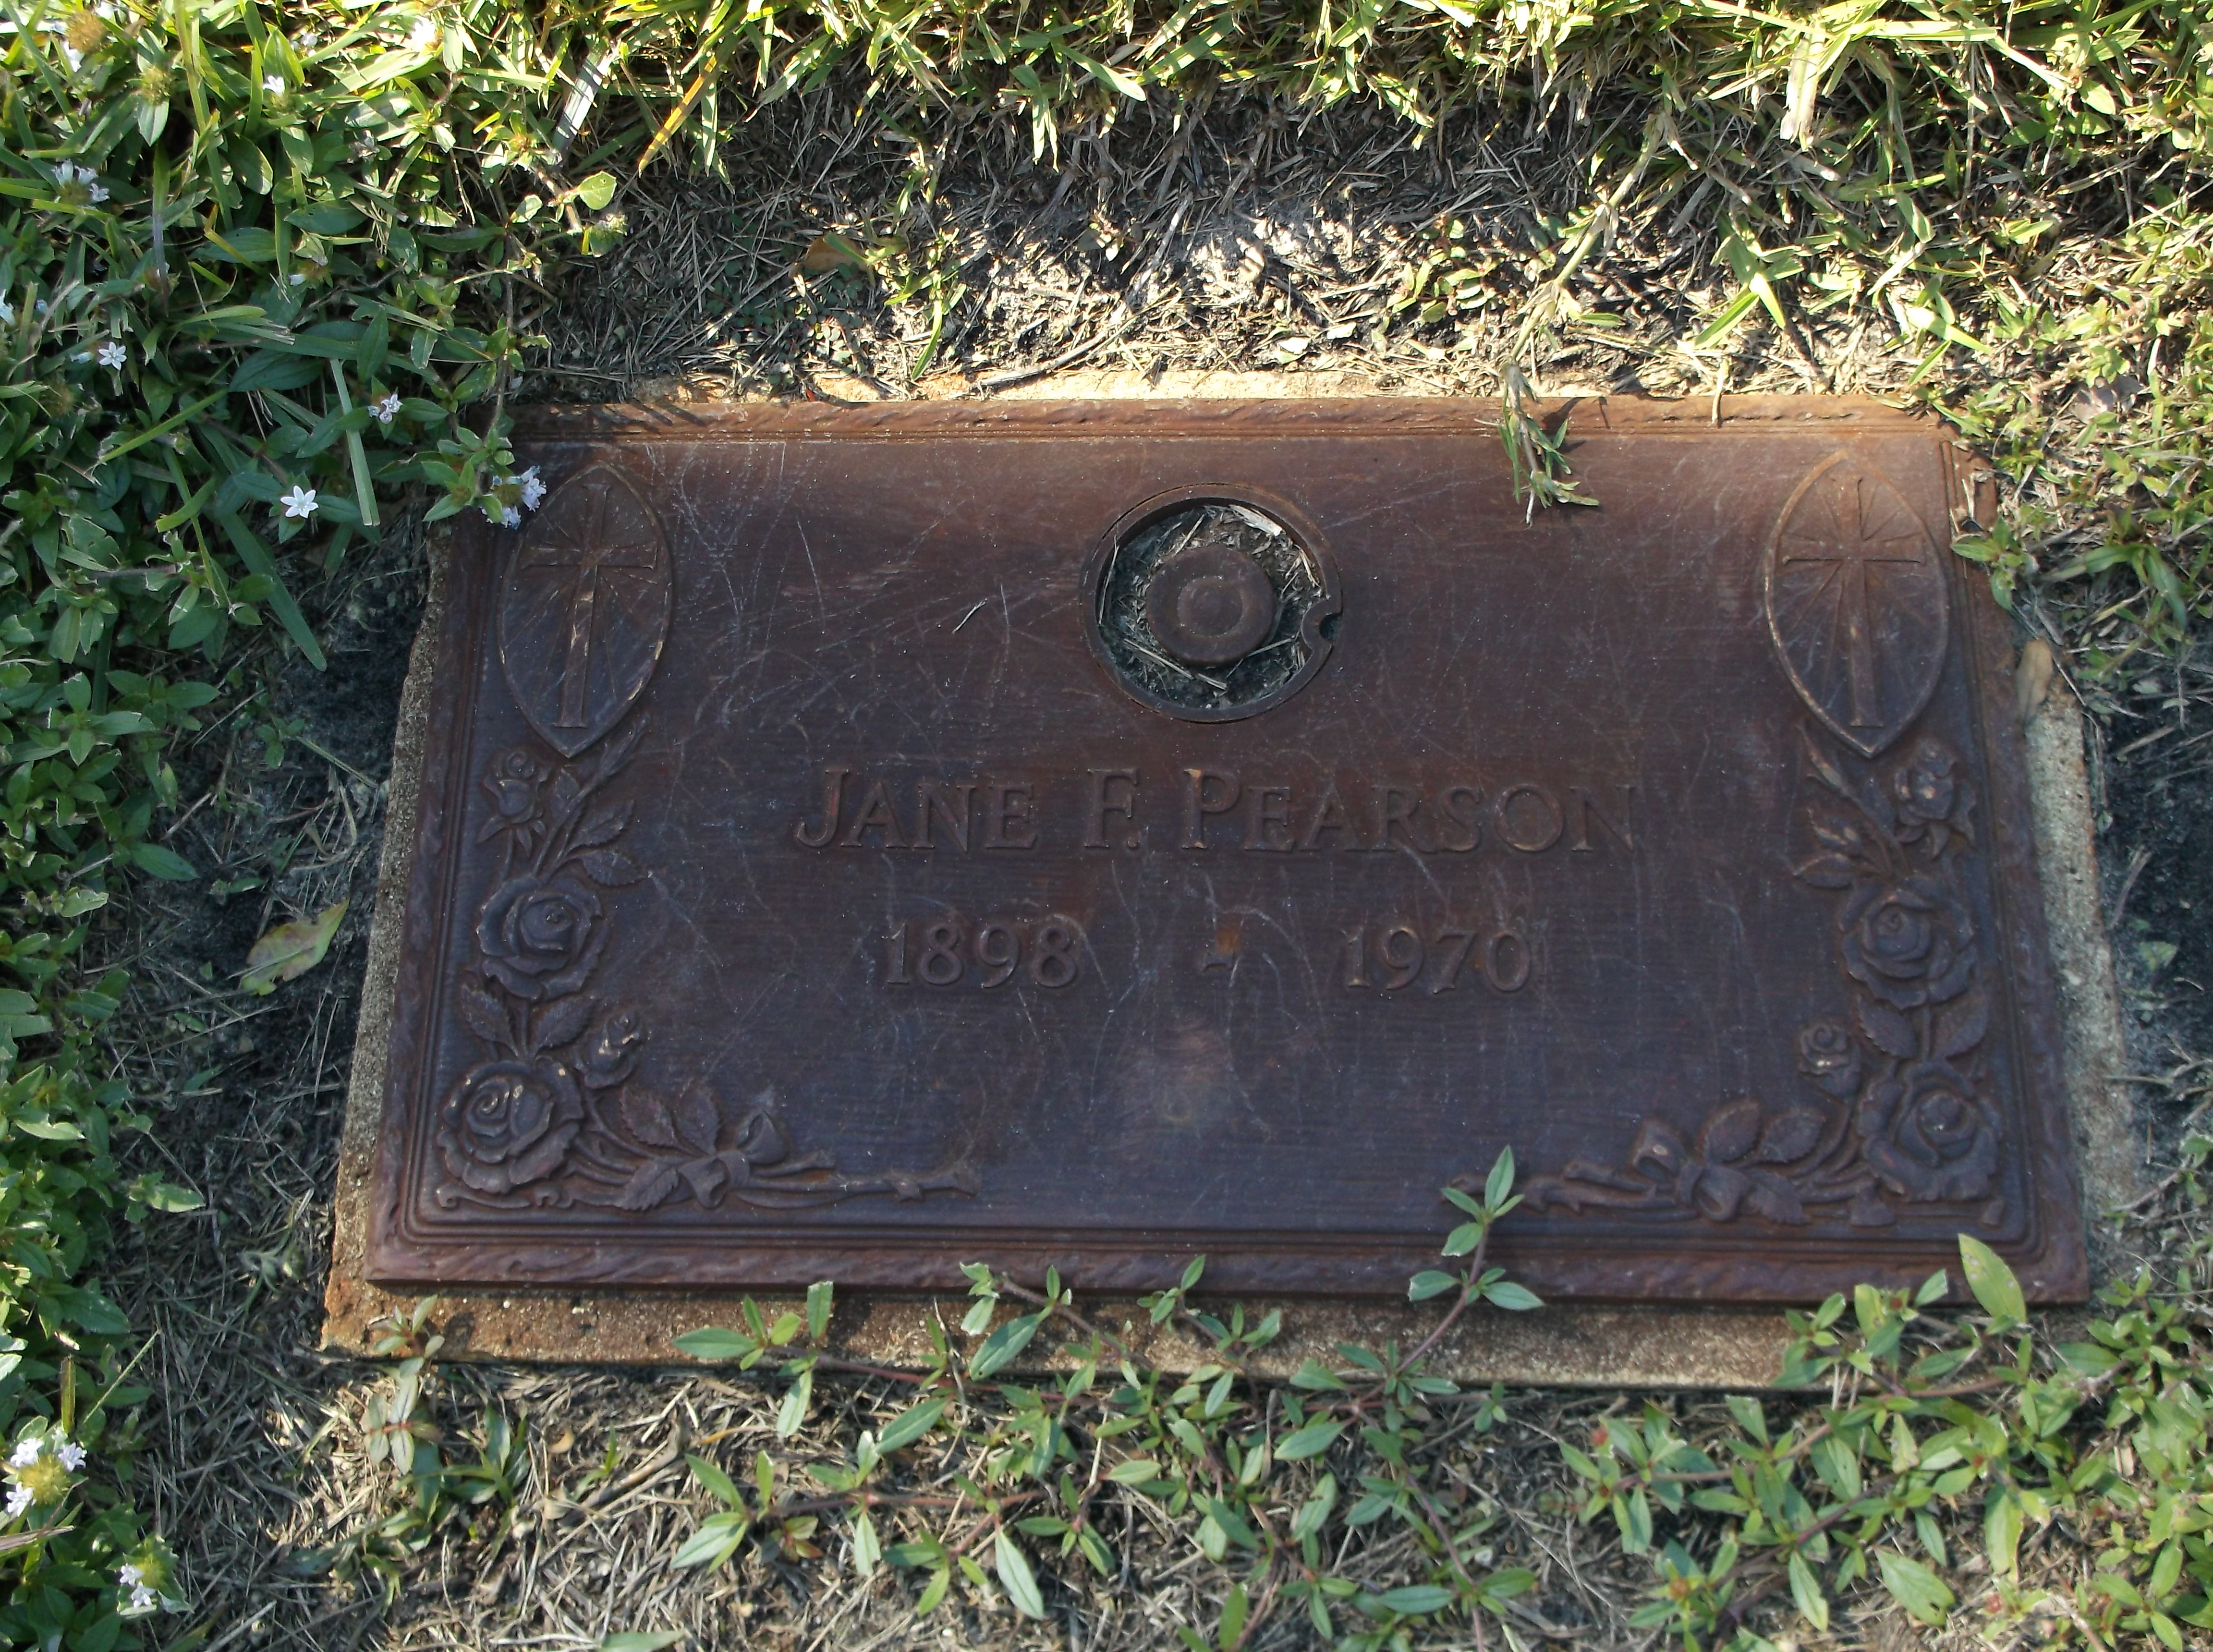 Jane F Pearson